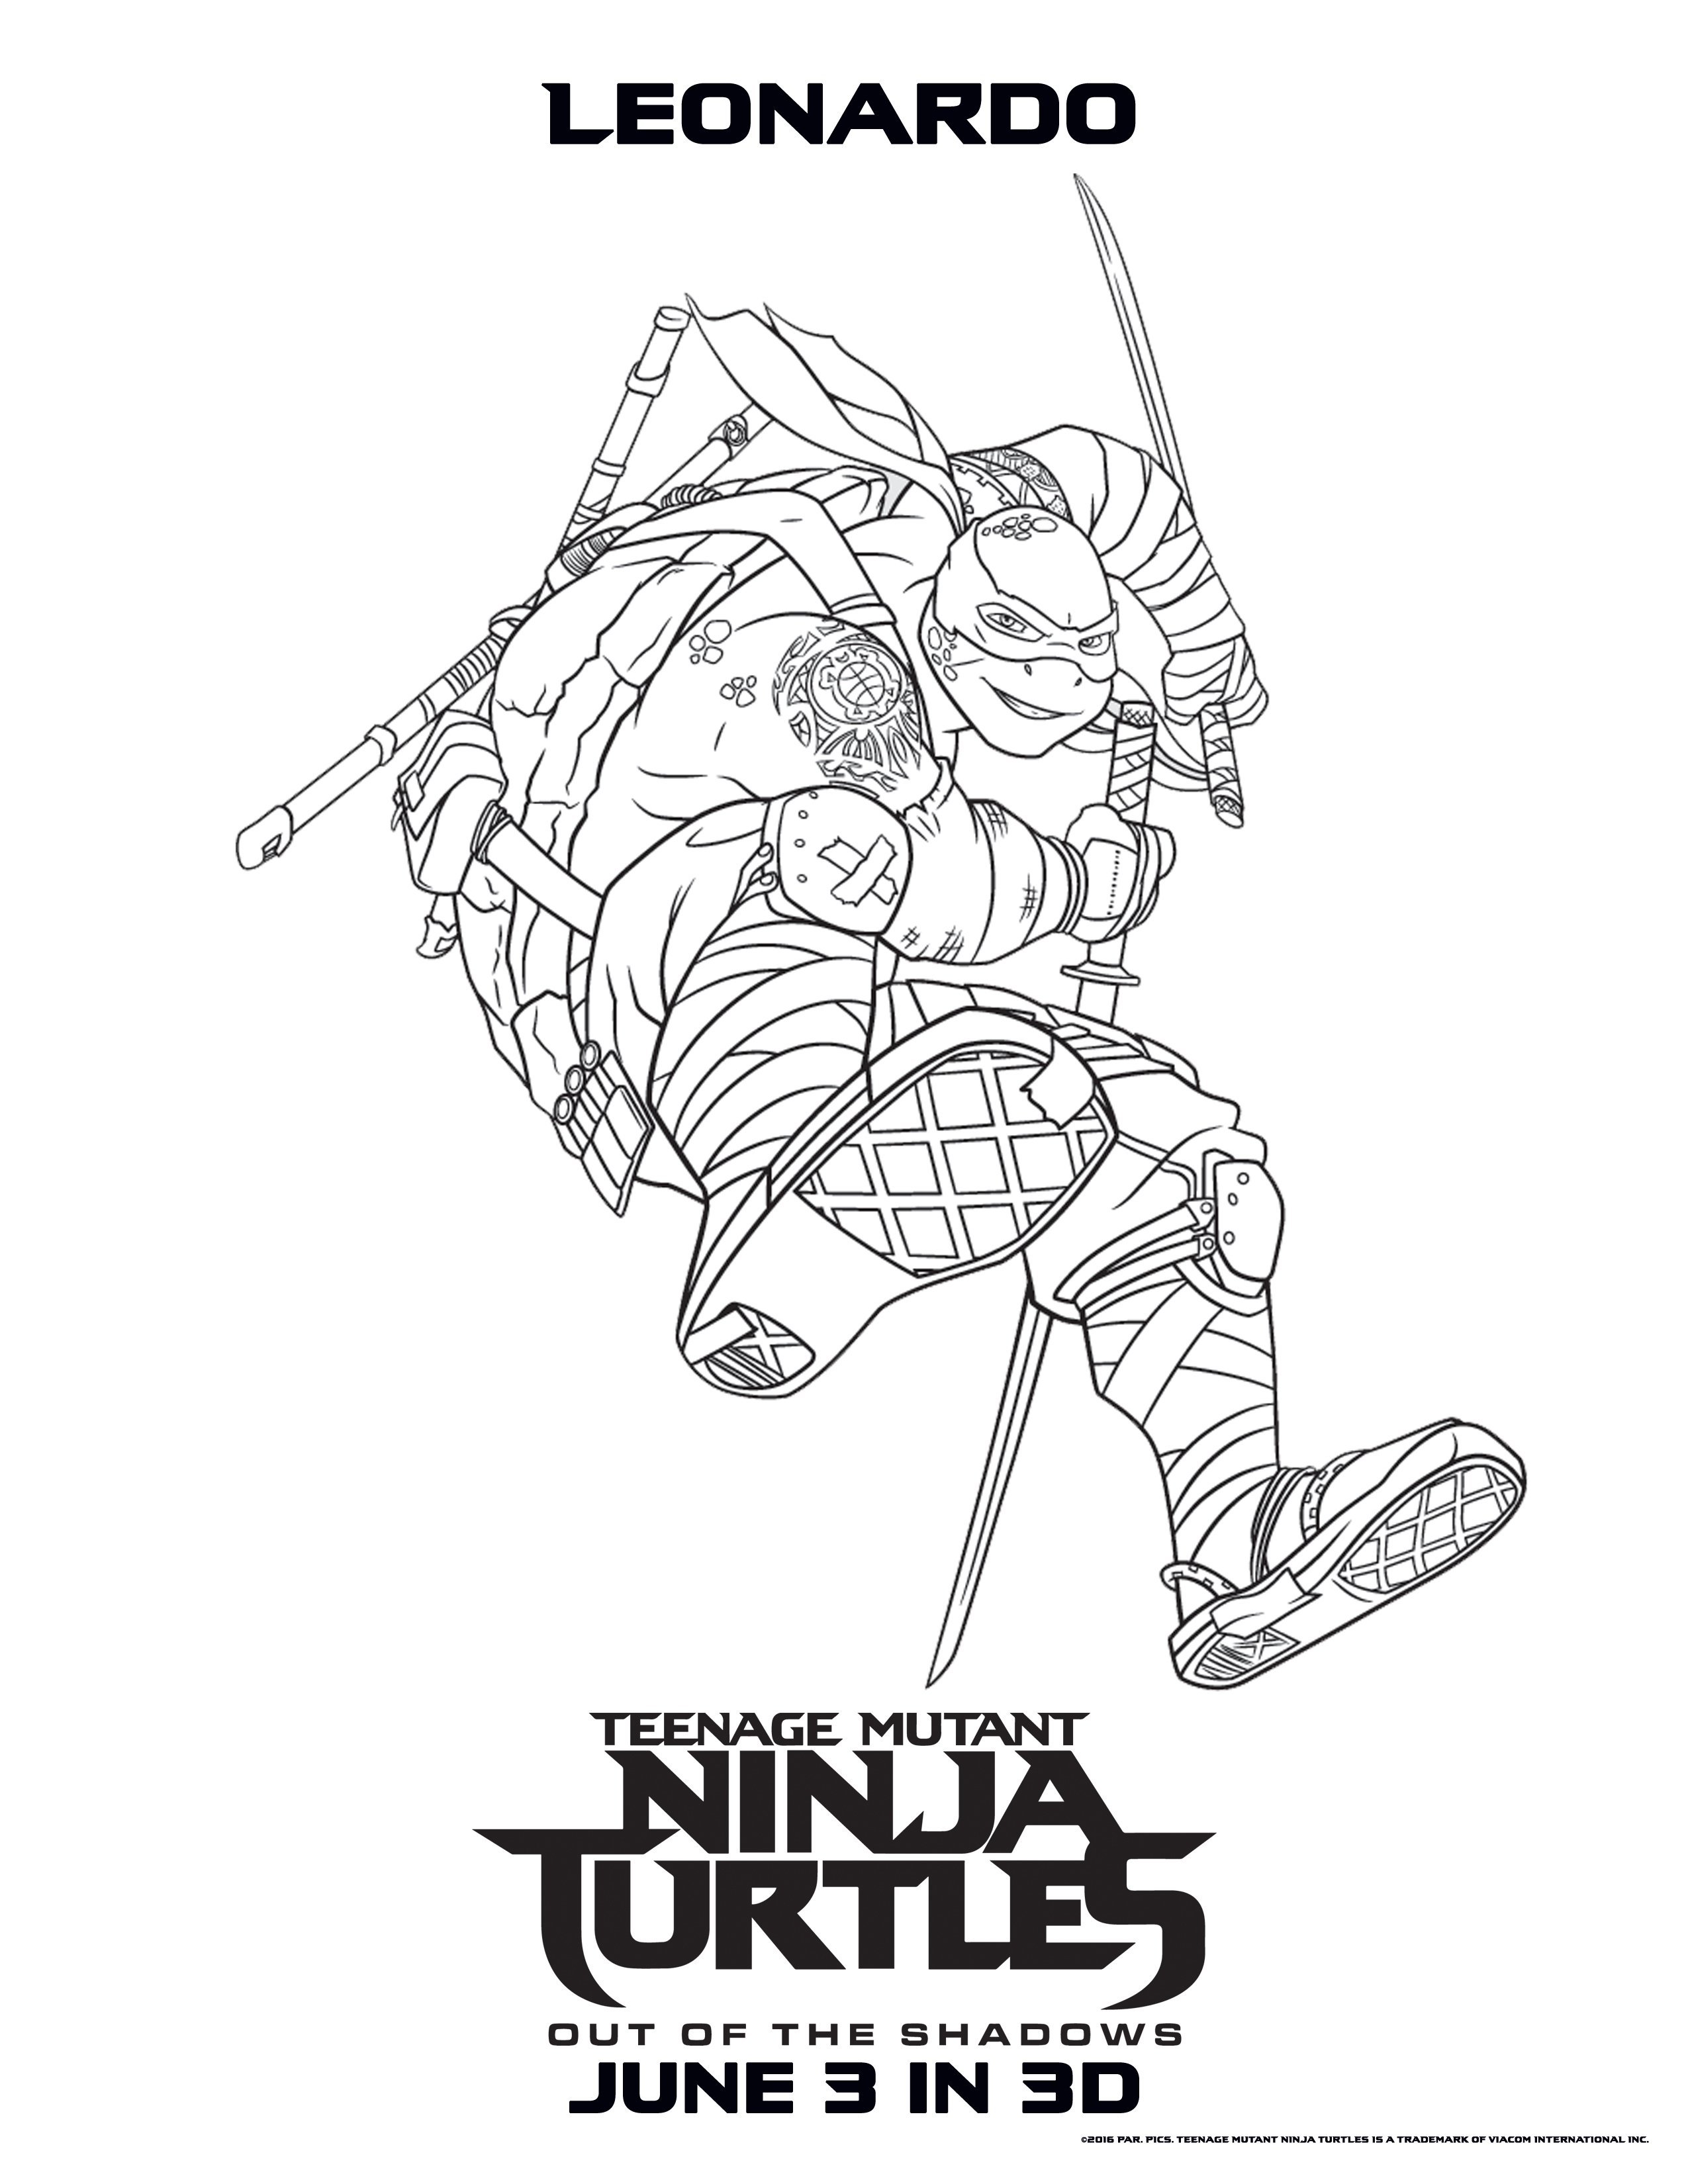 Tmnt fan on x teenage mutant ninja turtles out of the shadows